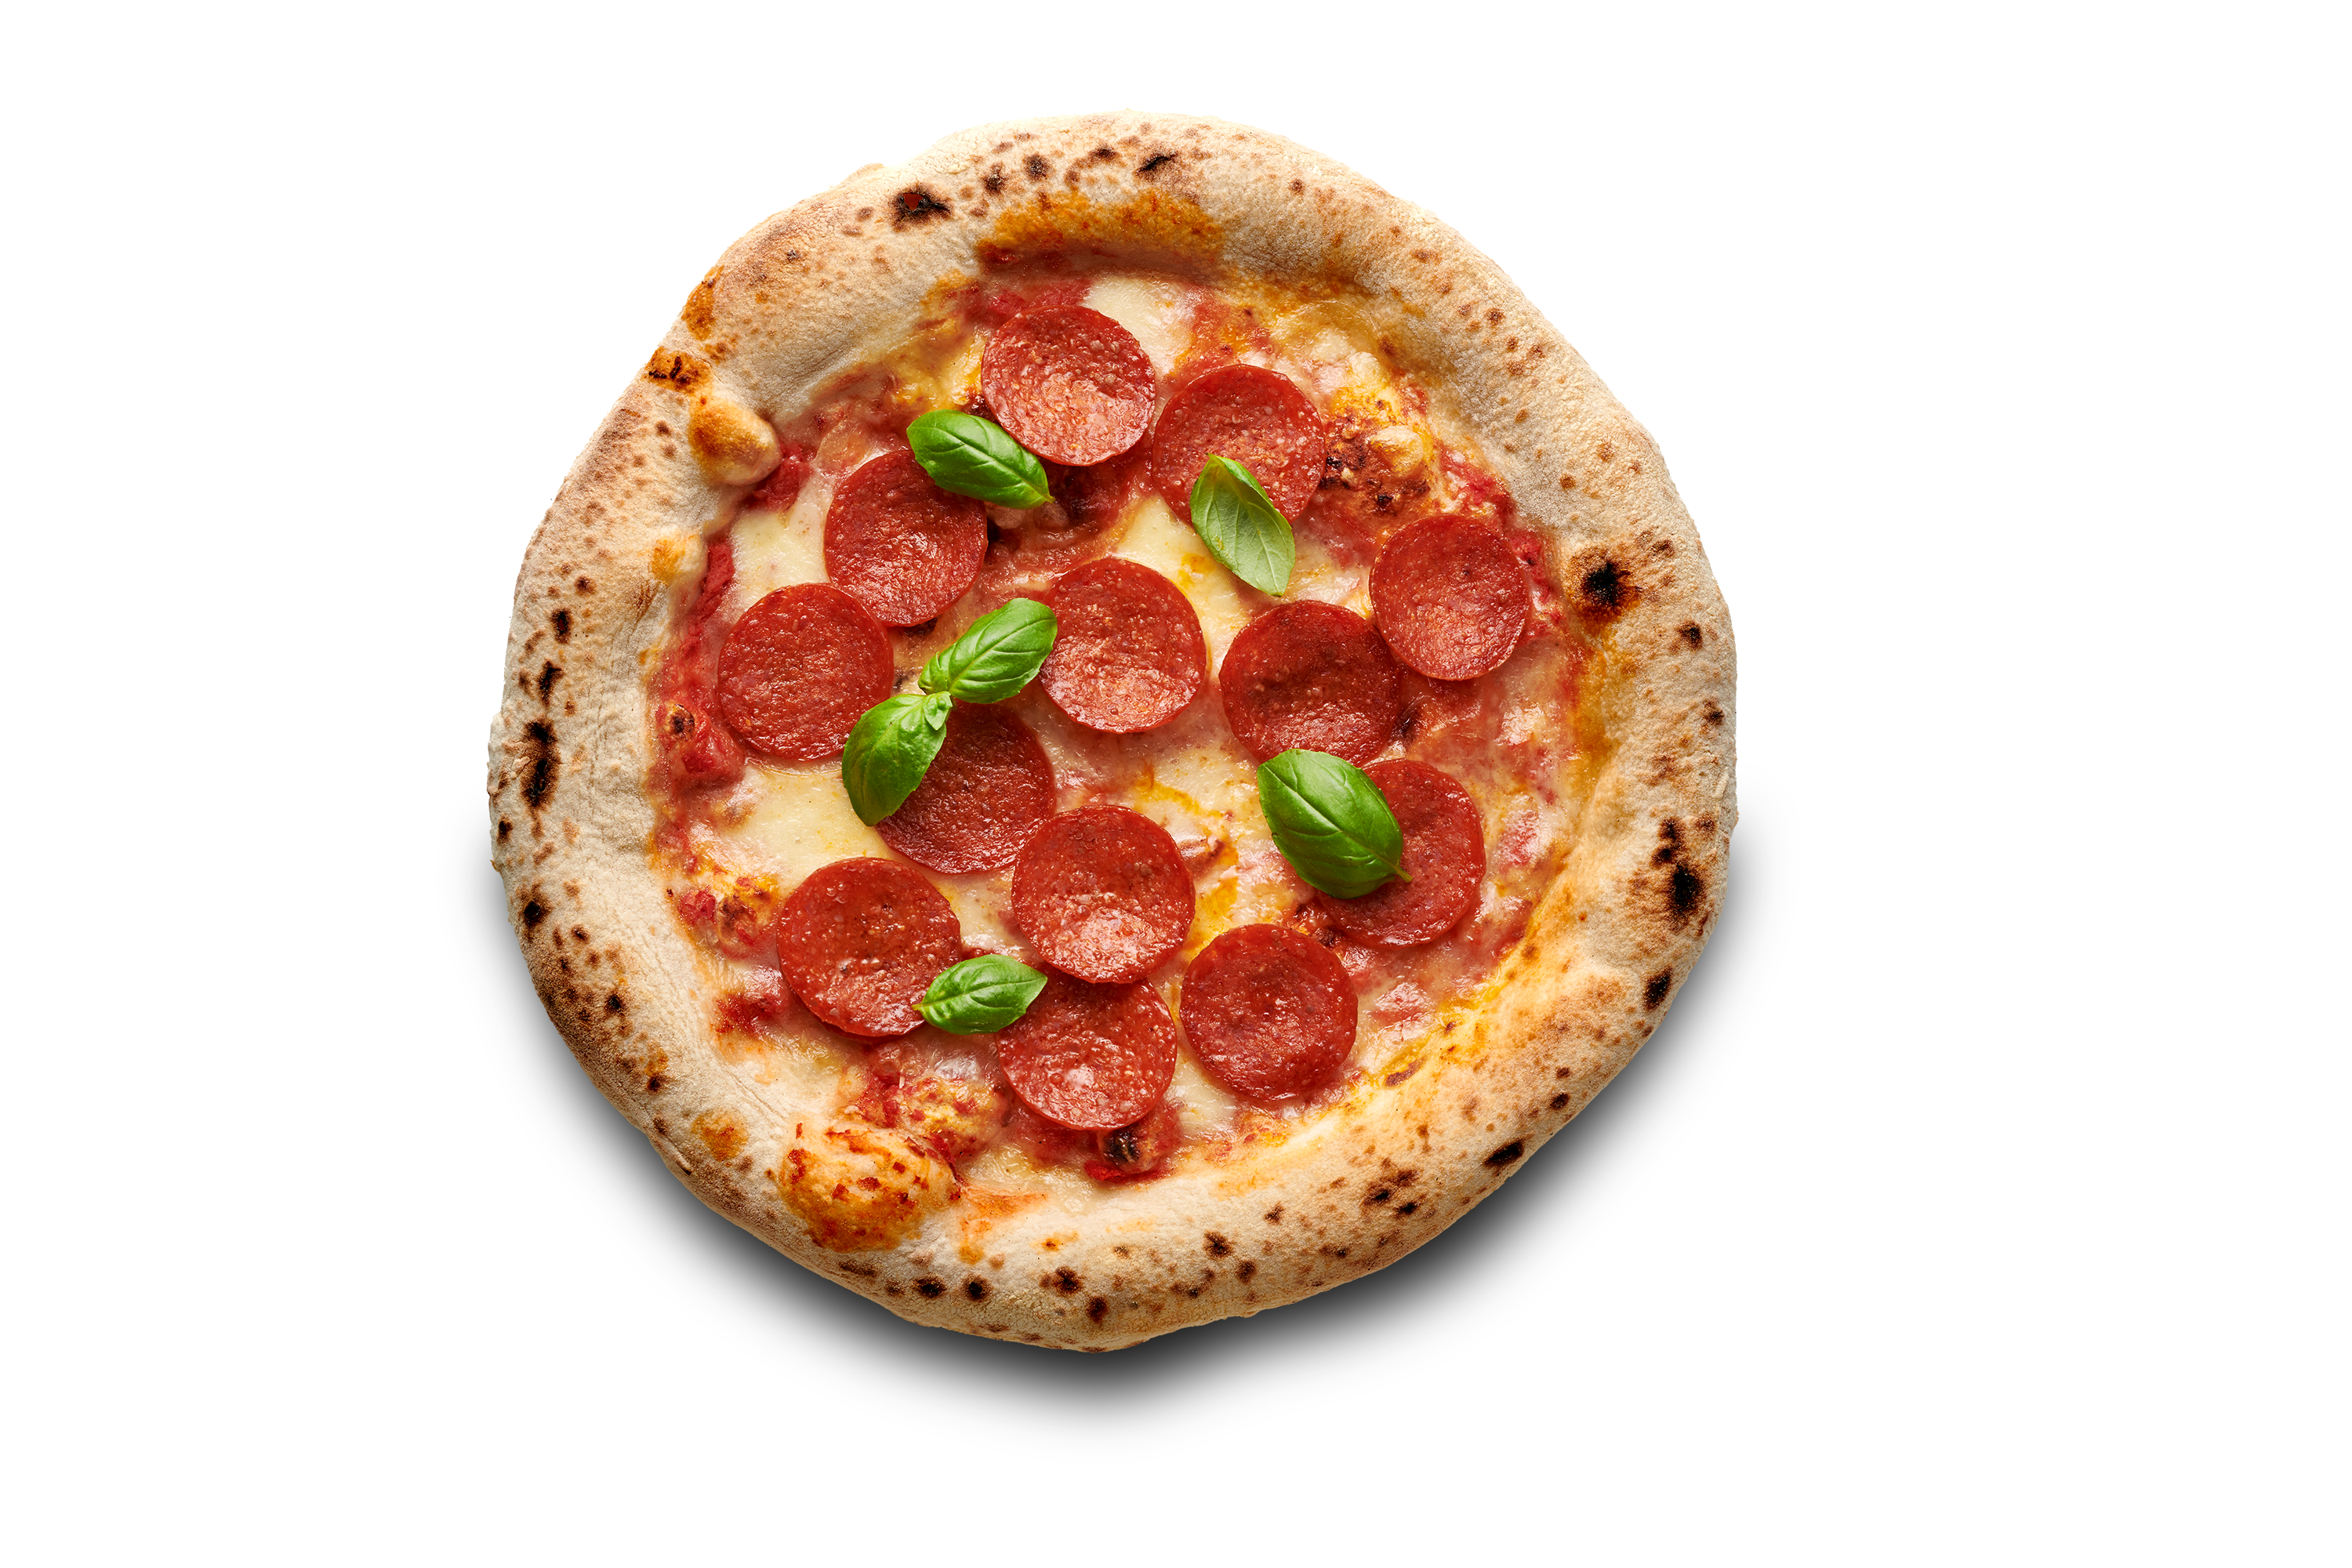 Teichners Mix + gratis Pizzateller (9er Bundle)